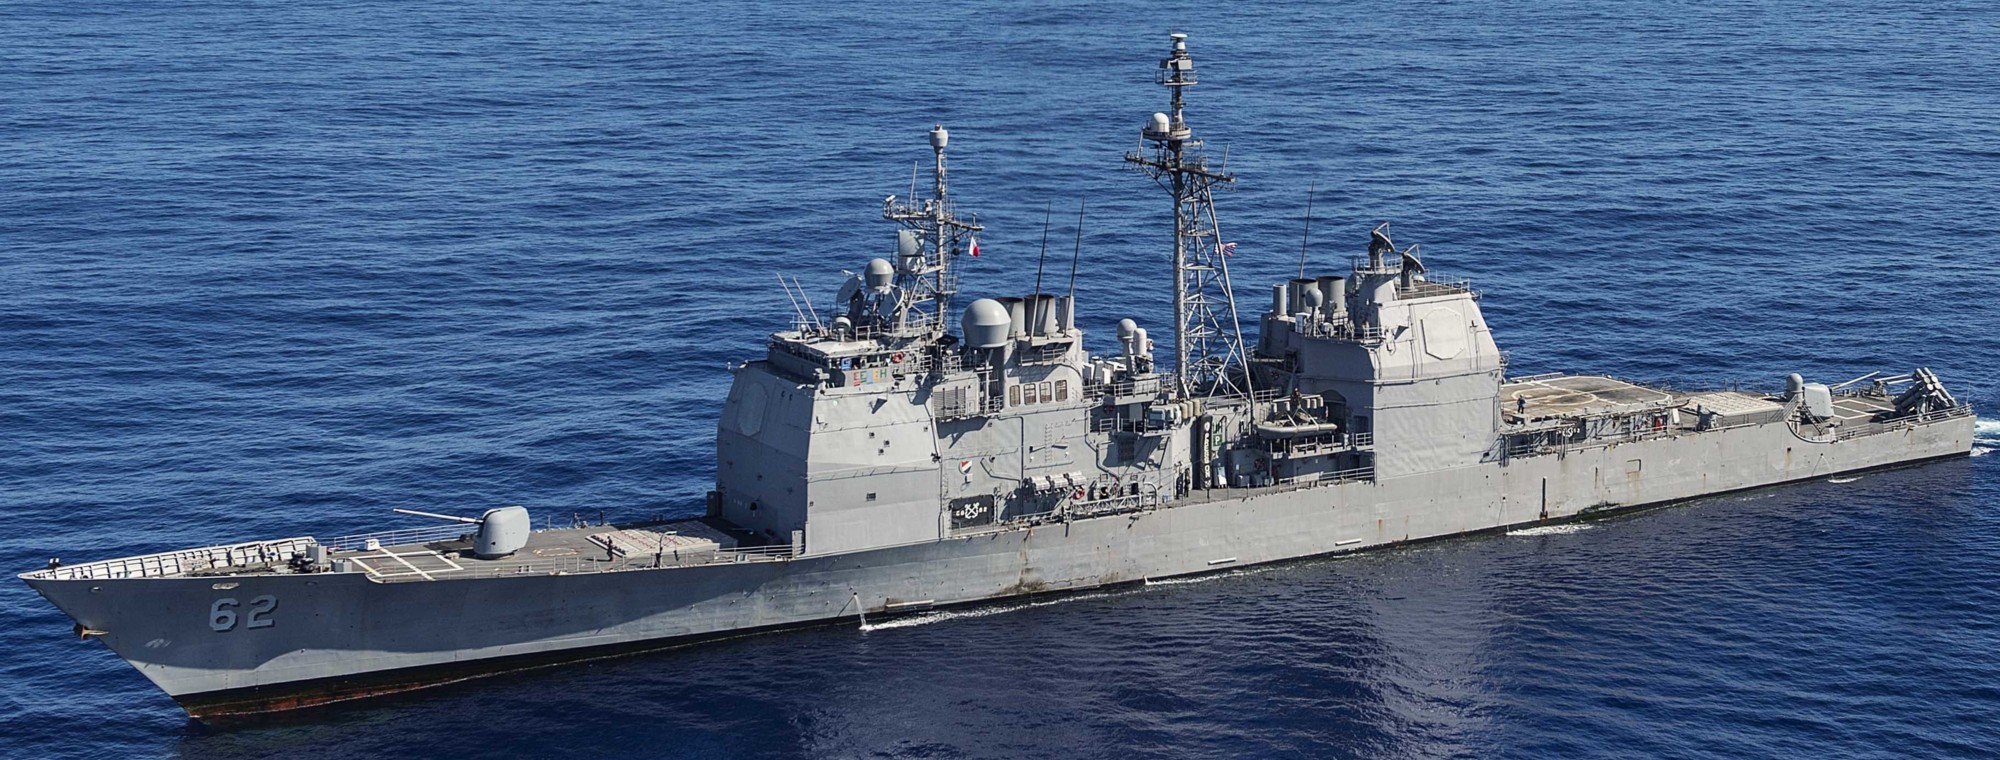 cg-62 uss chancellorsville ticonderoga class guided missile cruiser aegis us navy 68